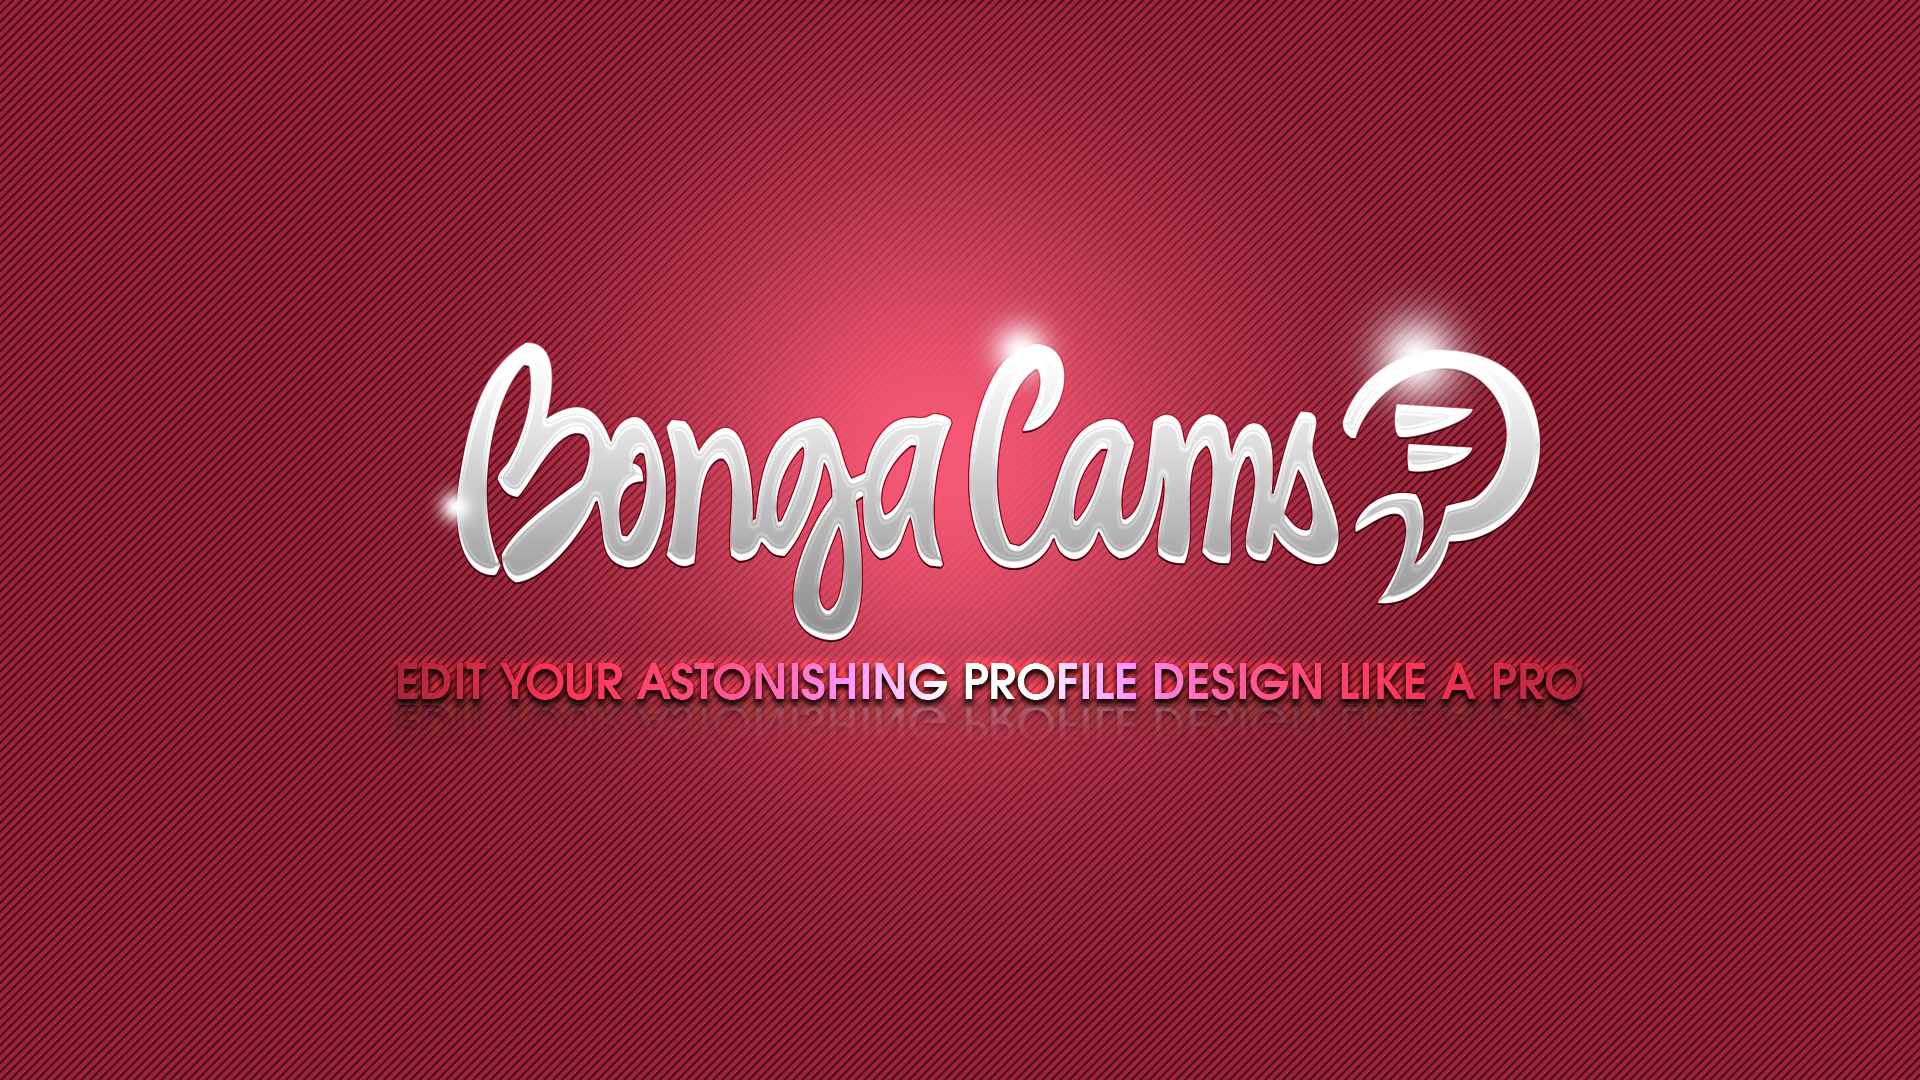 N bongacams. Bongacams логотип. Бонгакамс логотип. Bongacams значок. Бонгакам видеореклама.